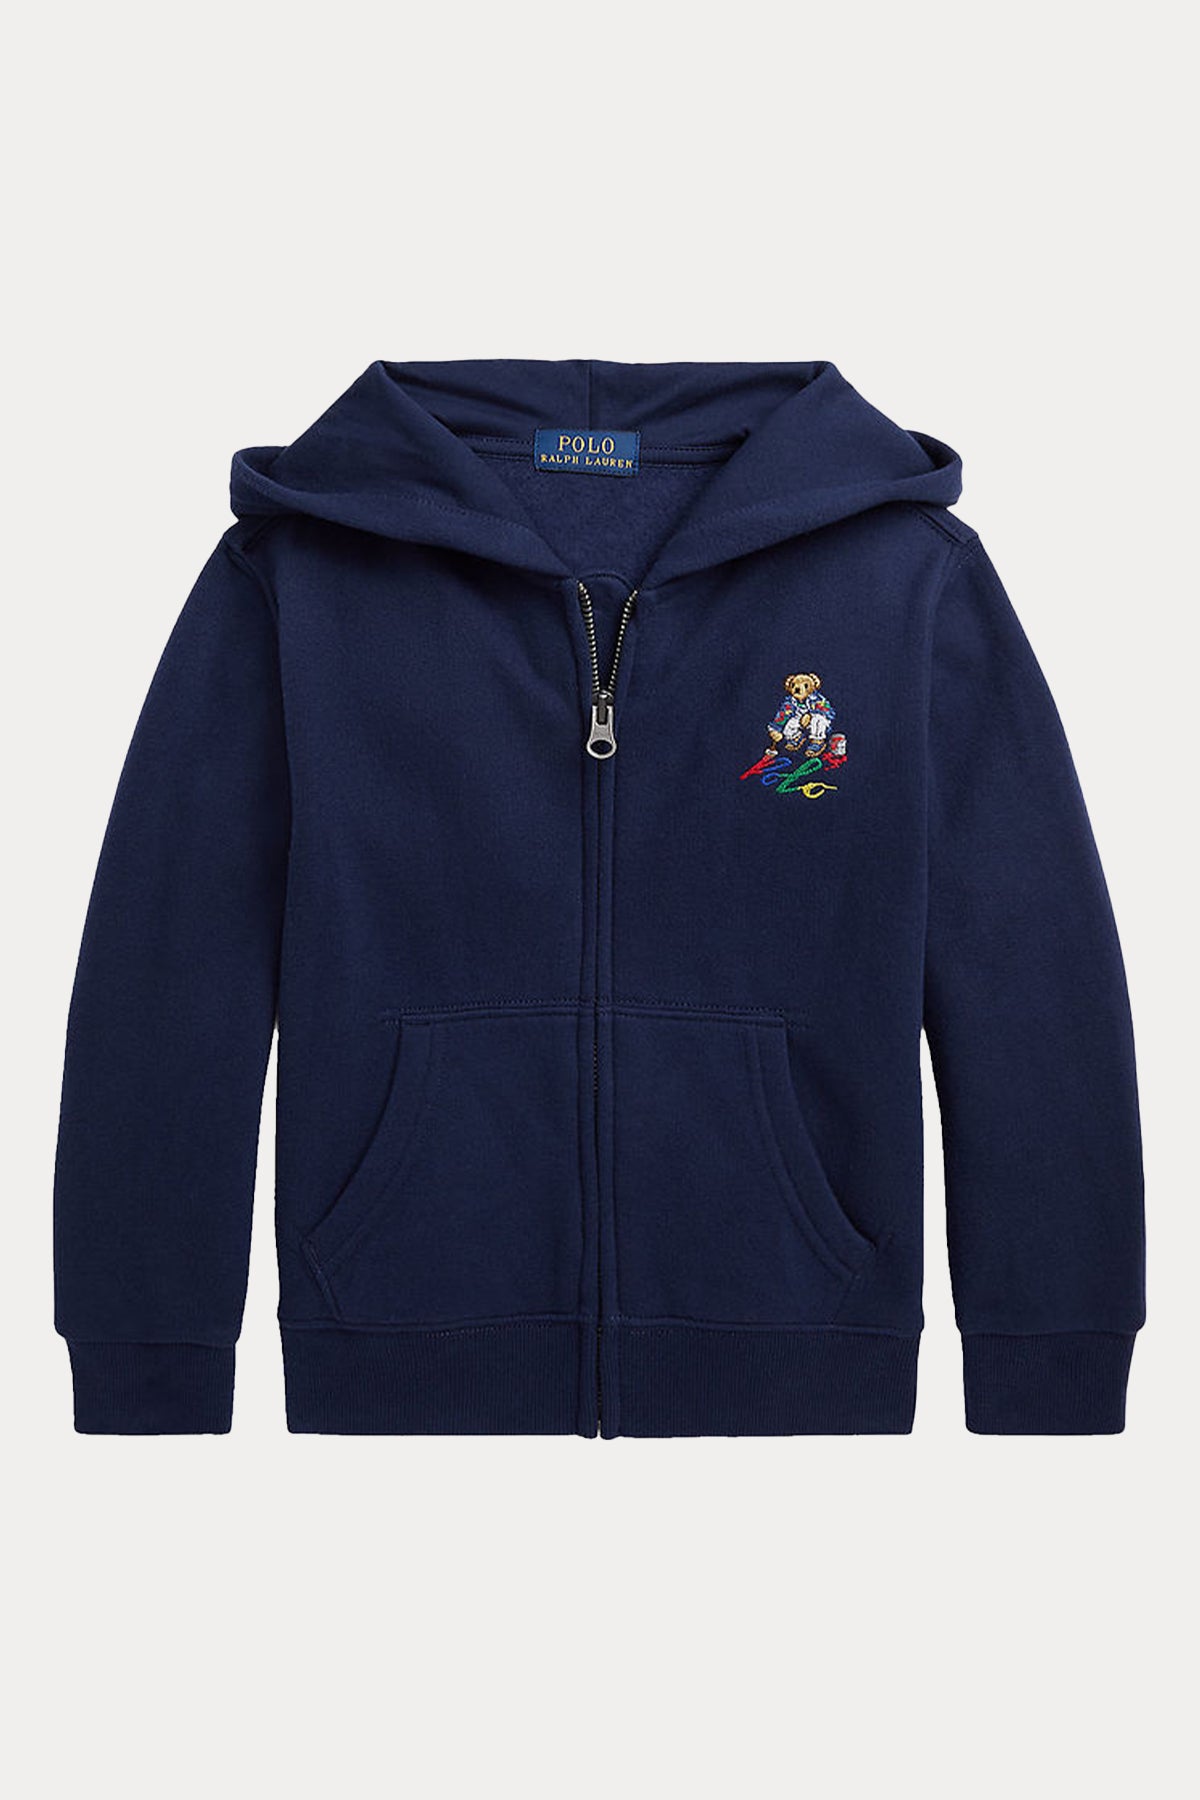 Polo Ralph Lauren Kids S-L Beden Unisex Çocuk Kapüşonlu Polo Bear Sweatshirt Ceket